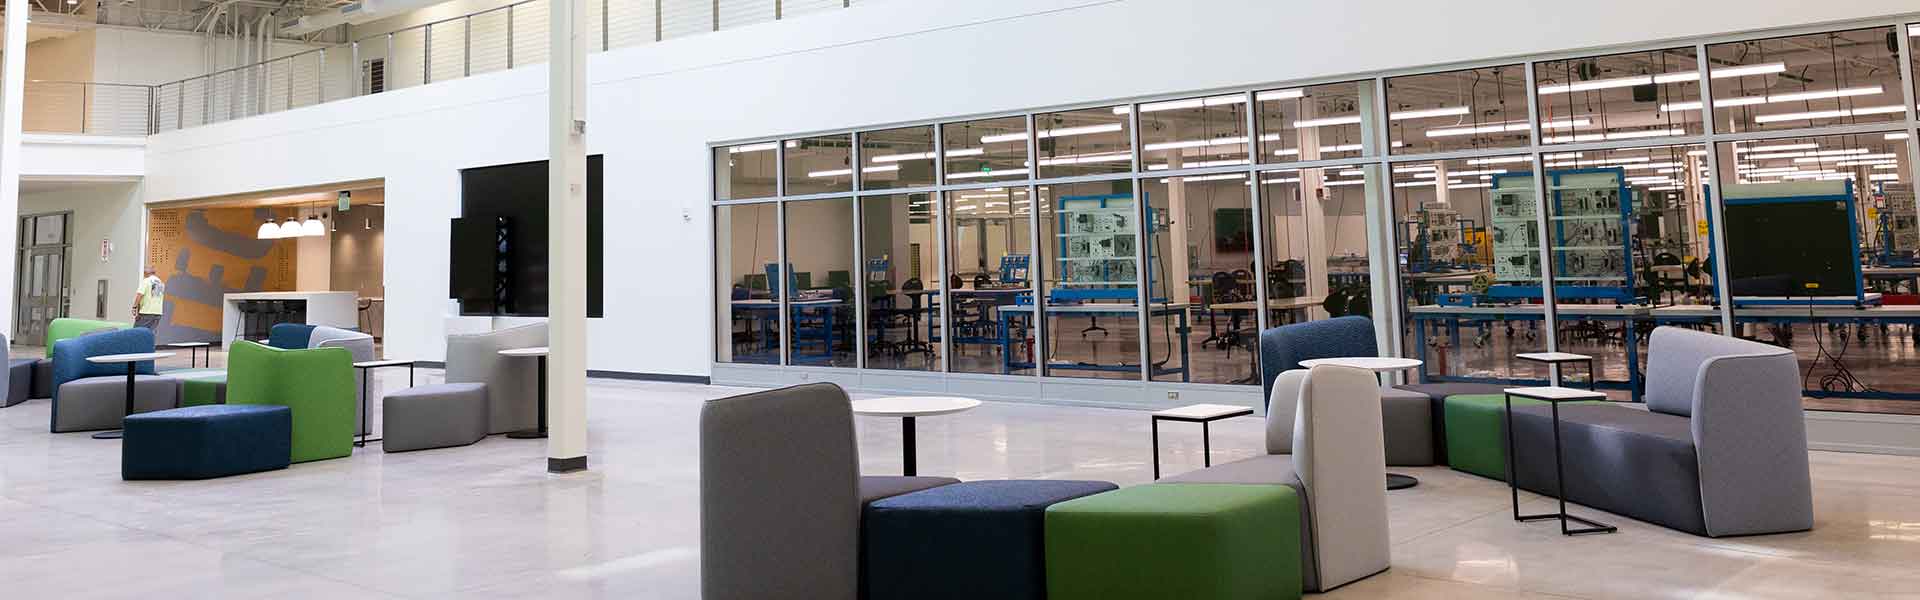 Foyer of Advanced Technology Center in Gurnee, Illinois